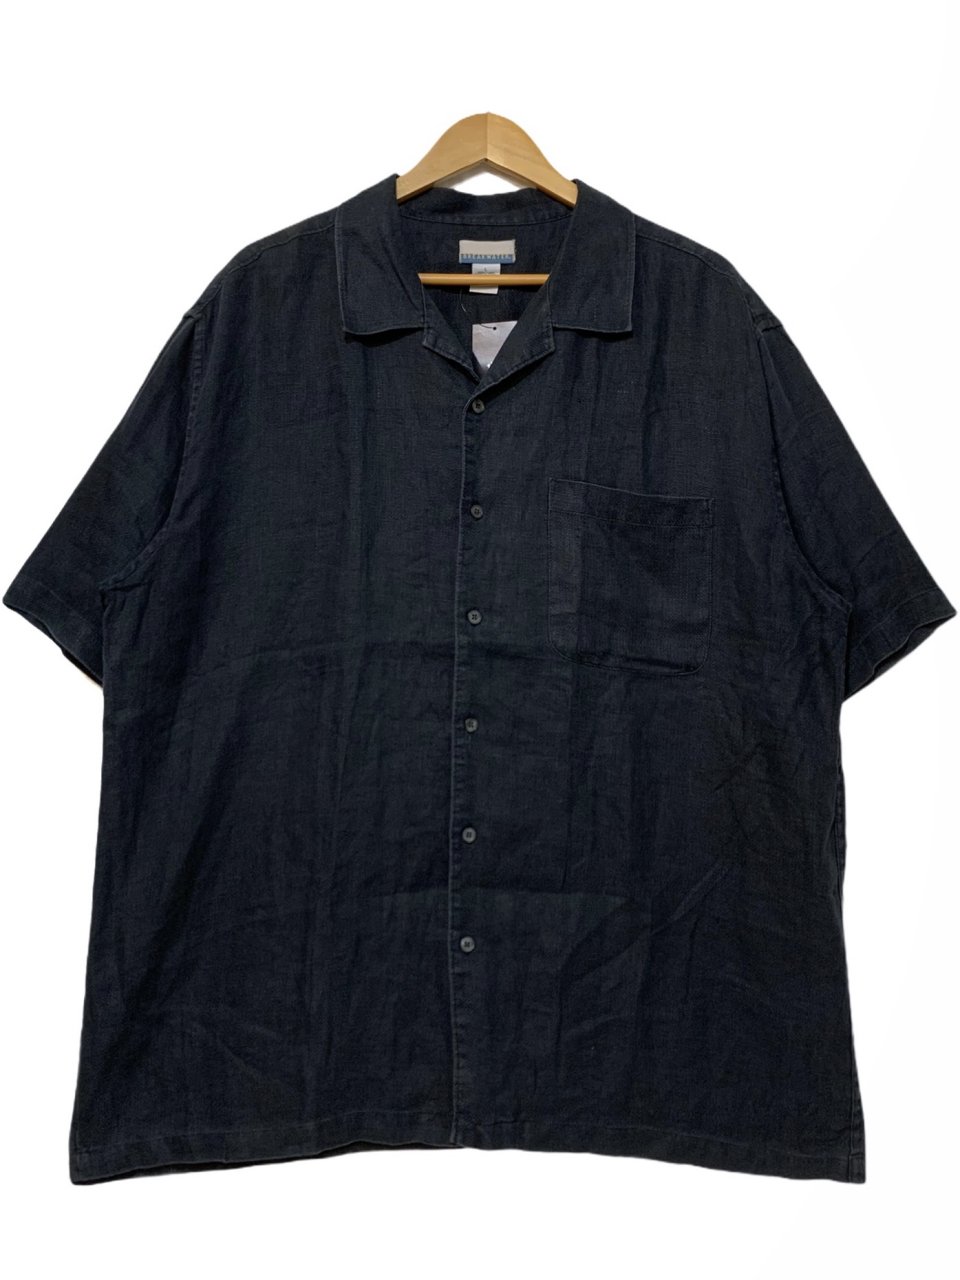 90s BREAKWATER Linen Open Collar S/S Shirt 黒 L 半袖 開襟シャツ 